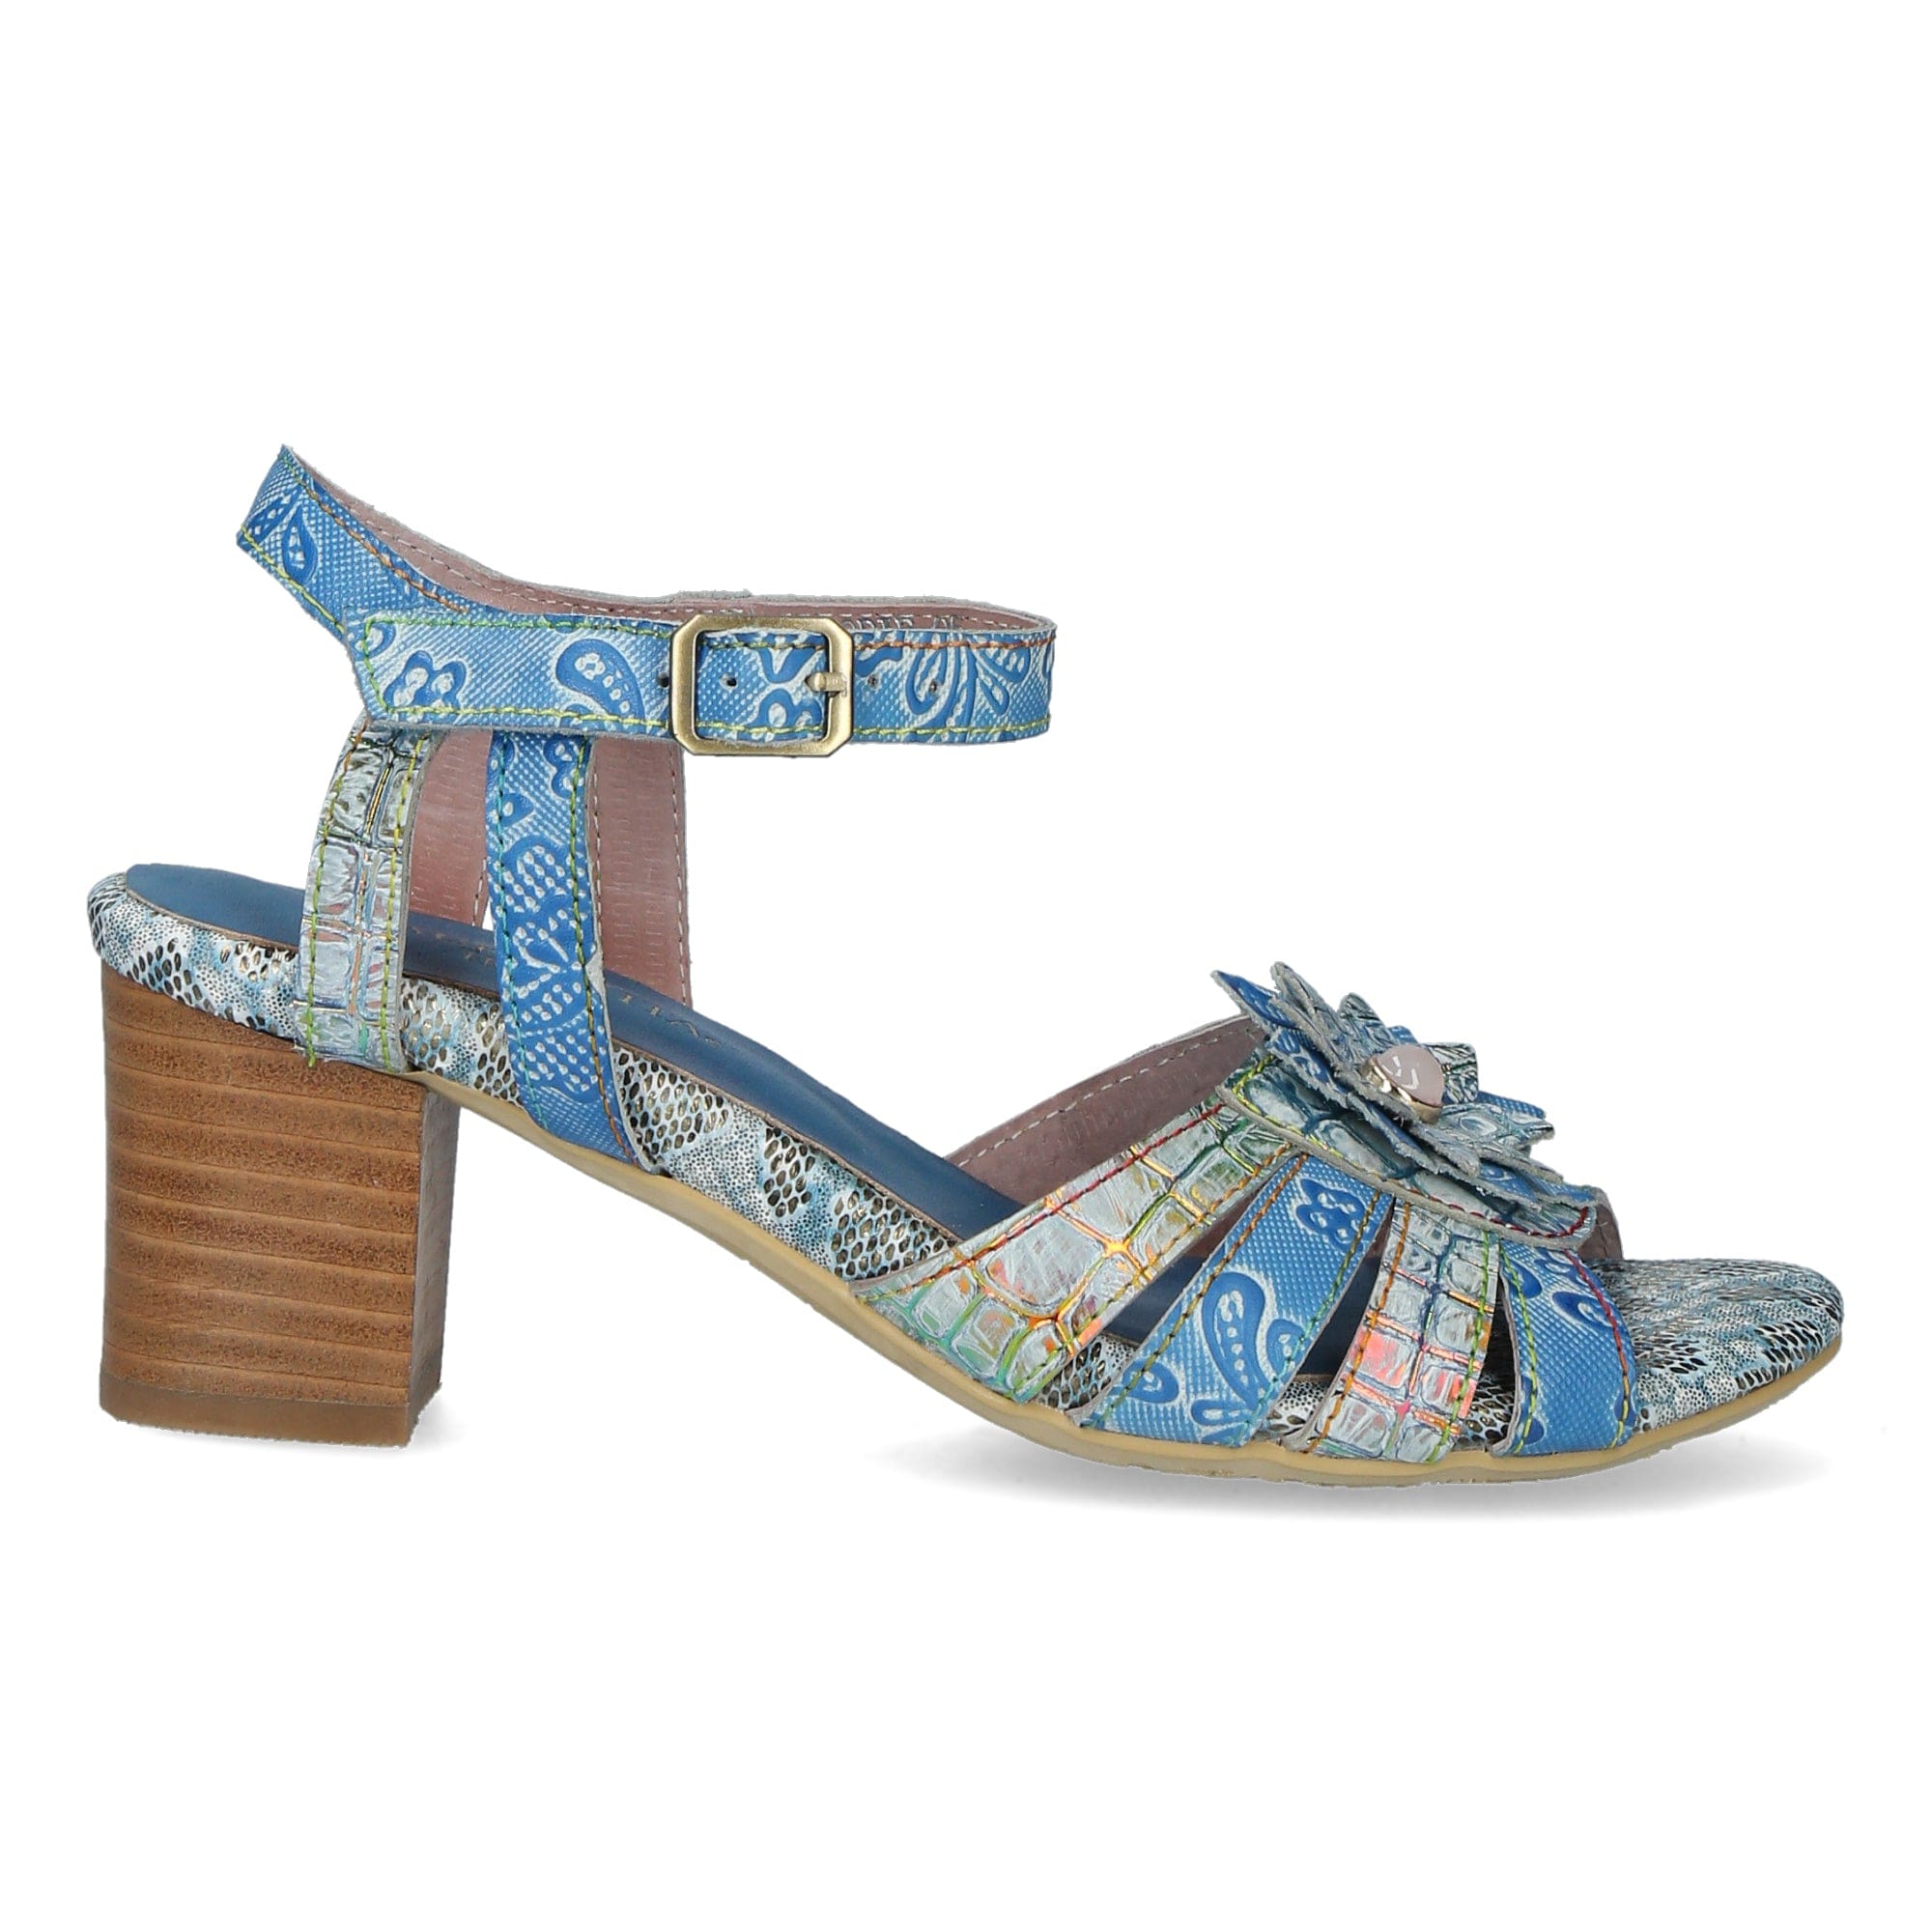 Chaussure FLCORIEO05 - 42 / BLUE - Sandale